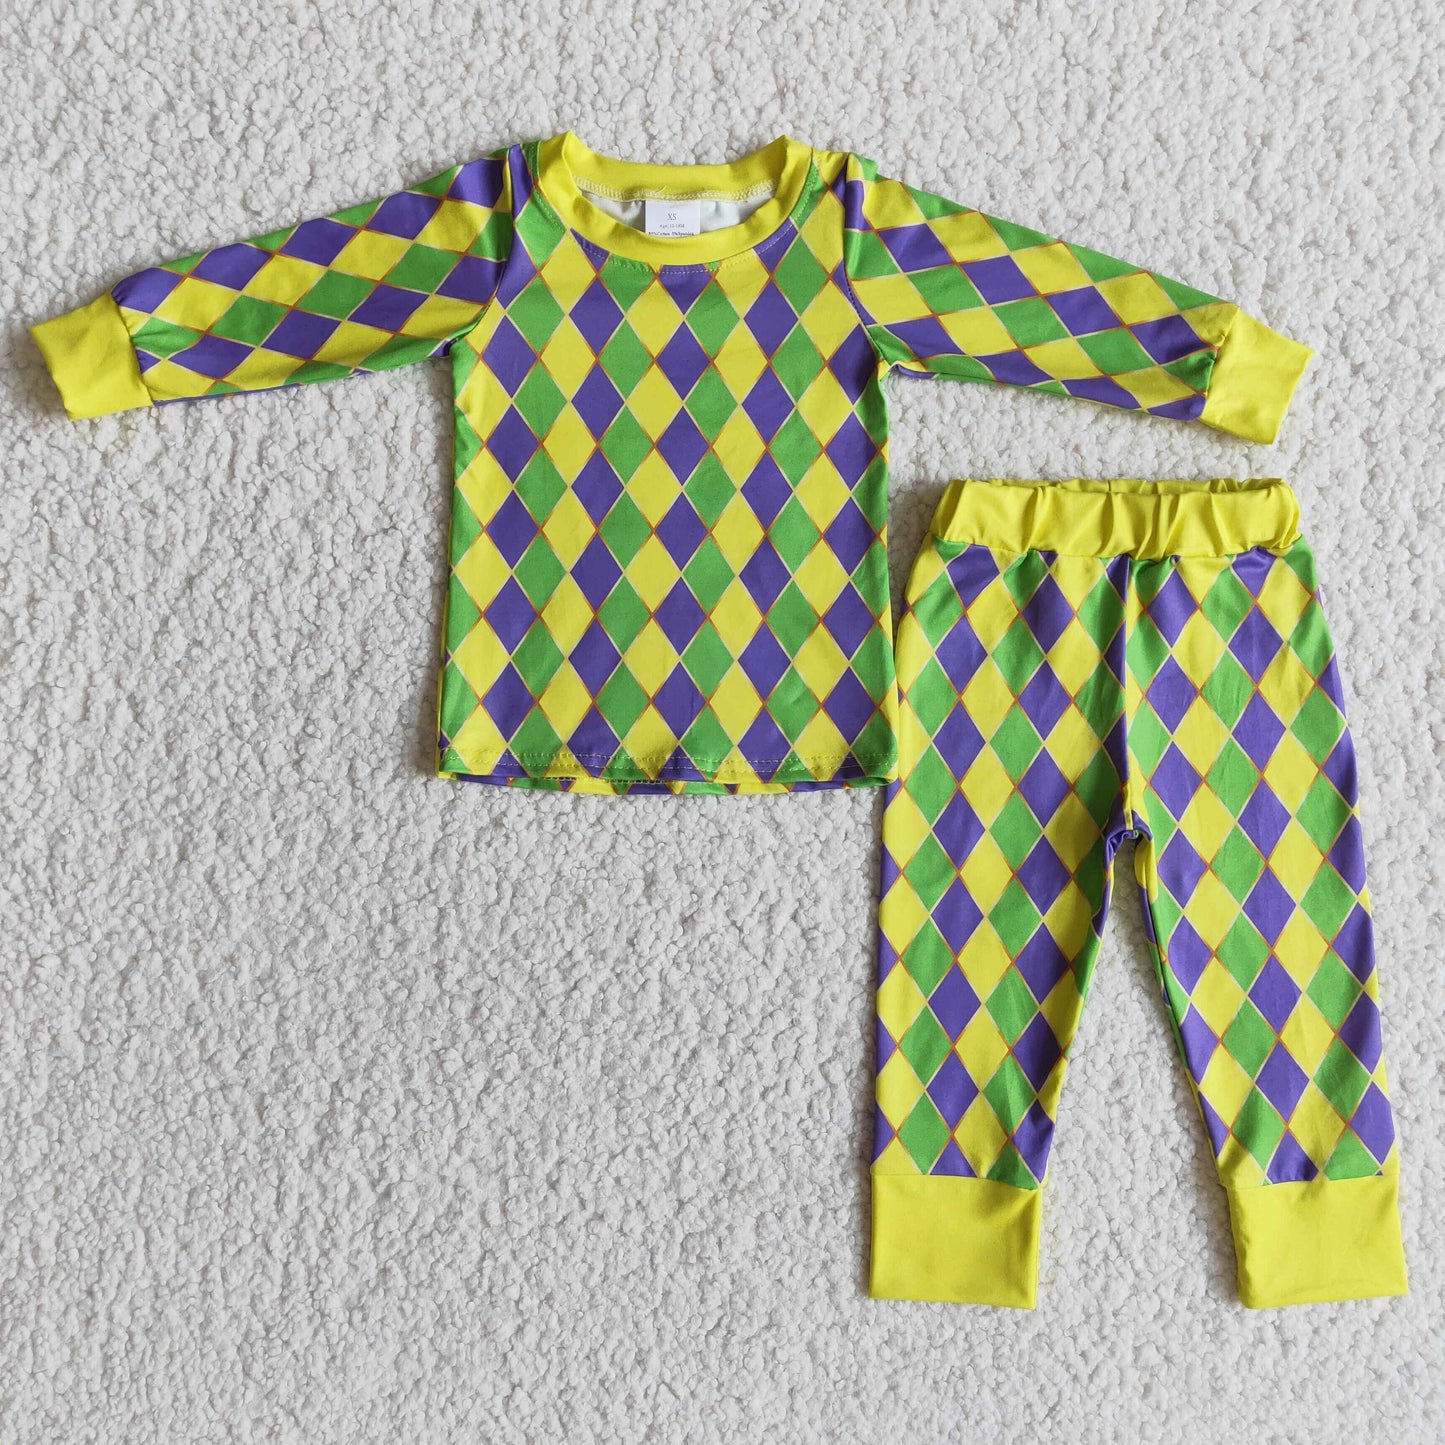 mardi purple yellow green pajamas outfit boy